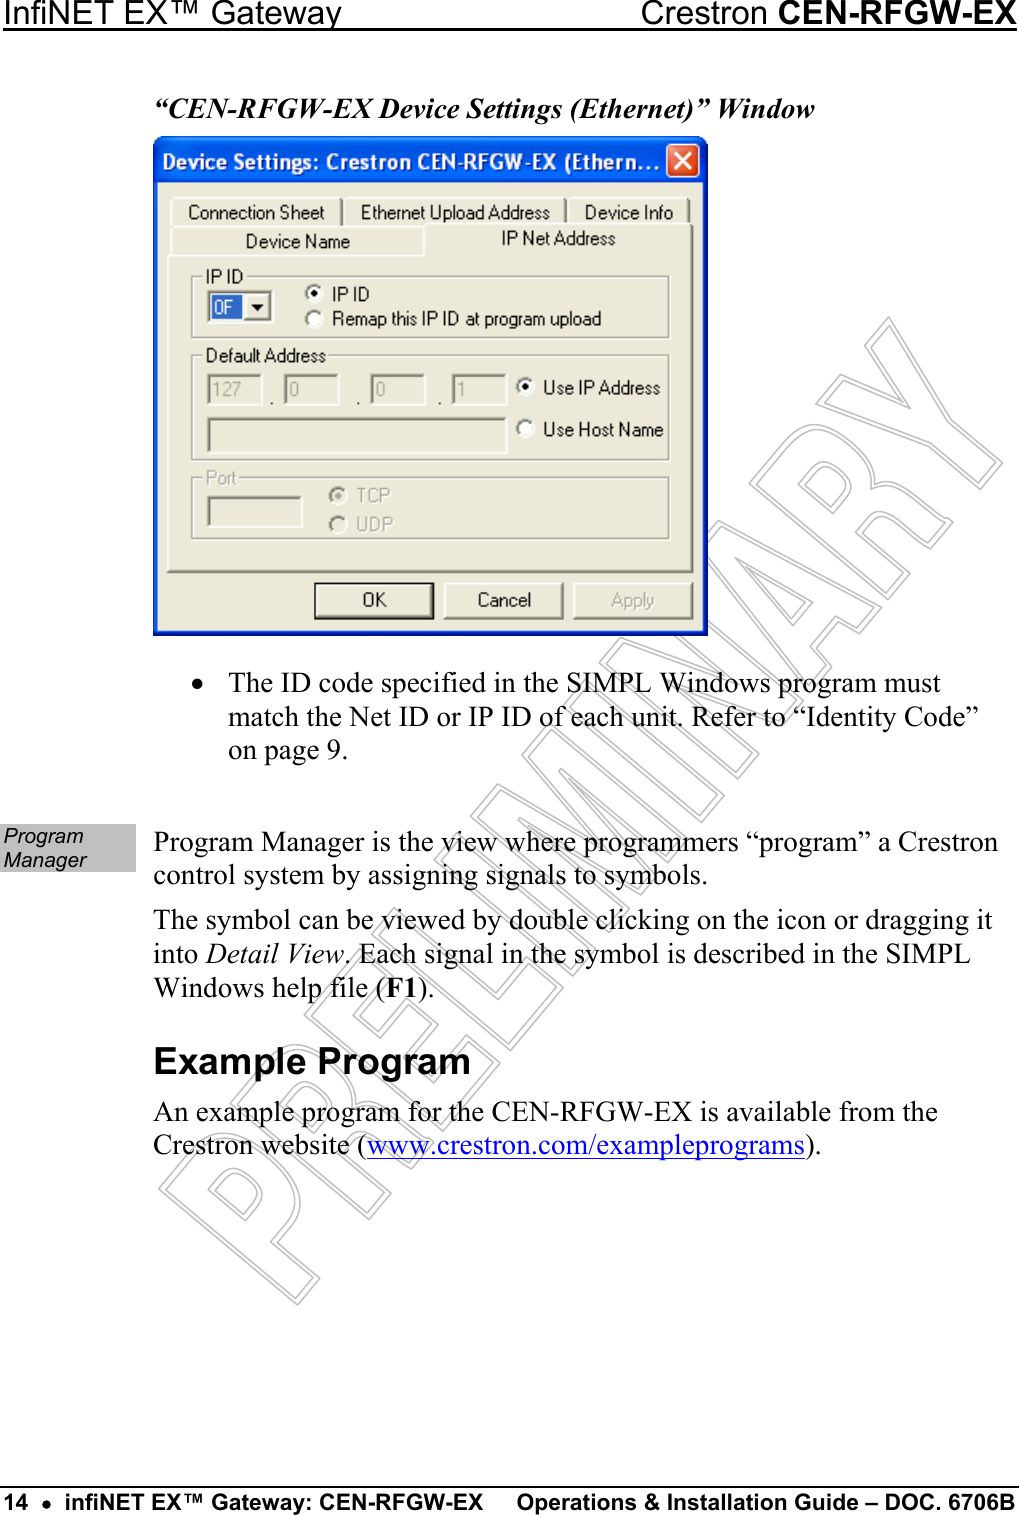 Crestron Hd-ext3-c-b_system User Manual